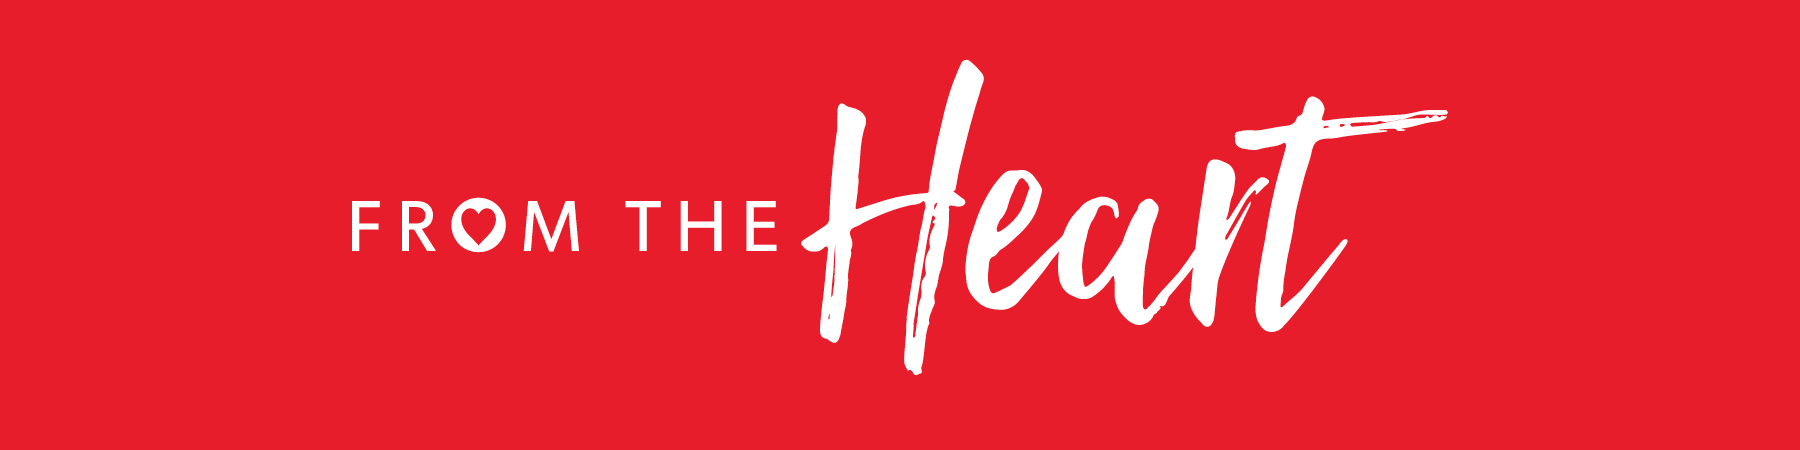 how to keep your heart healthy | Arkansas Heart Hospital | From the Heart Blog